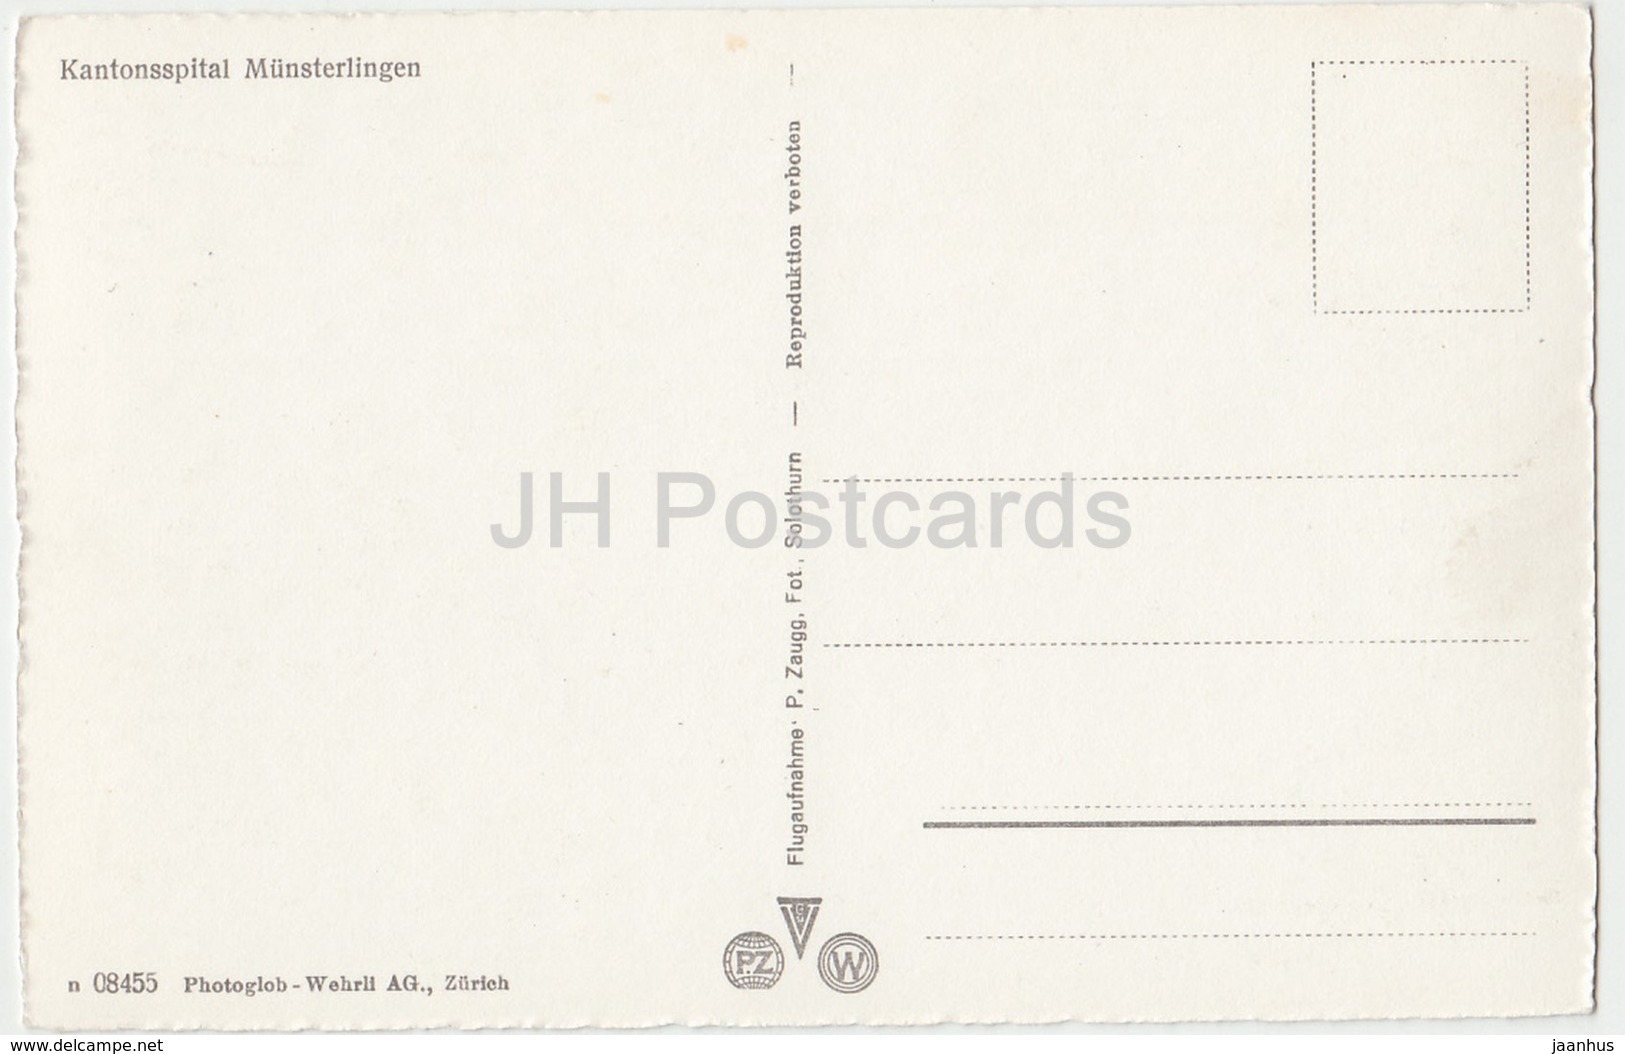 Kantonsspital Munsterlingen - 08455 - Switzerland - Old Postcard - Unused - Münsterlingen